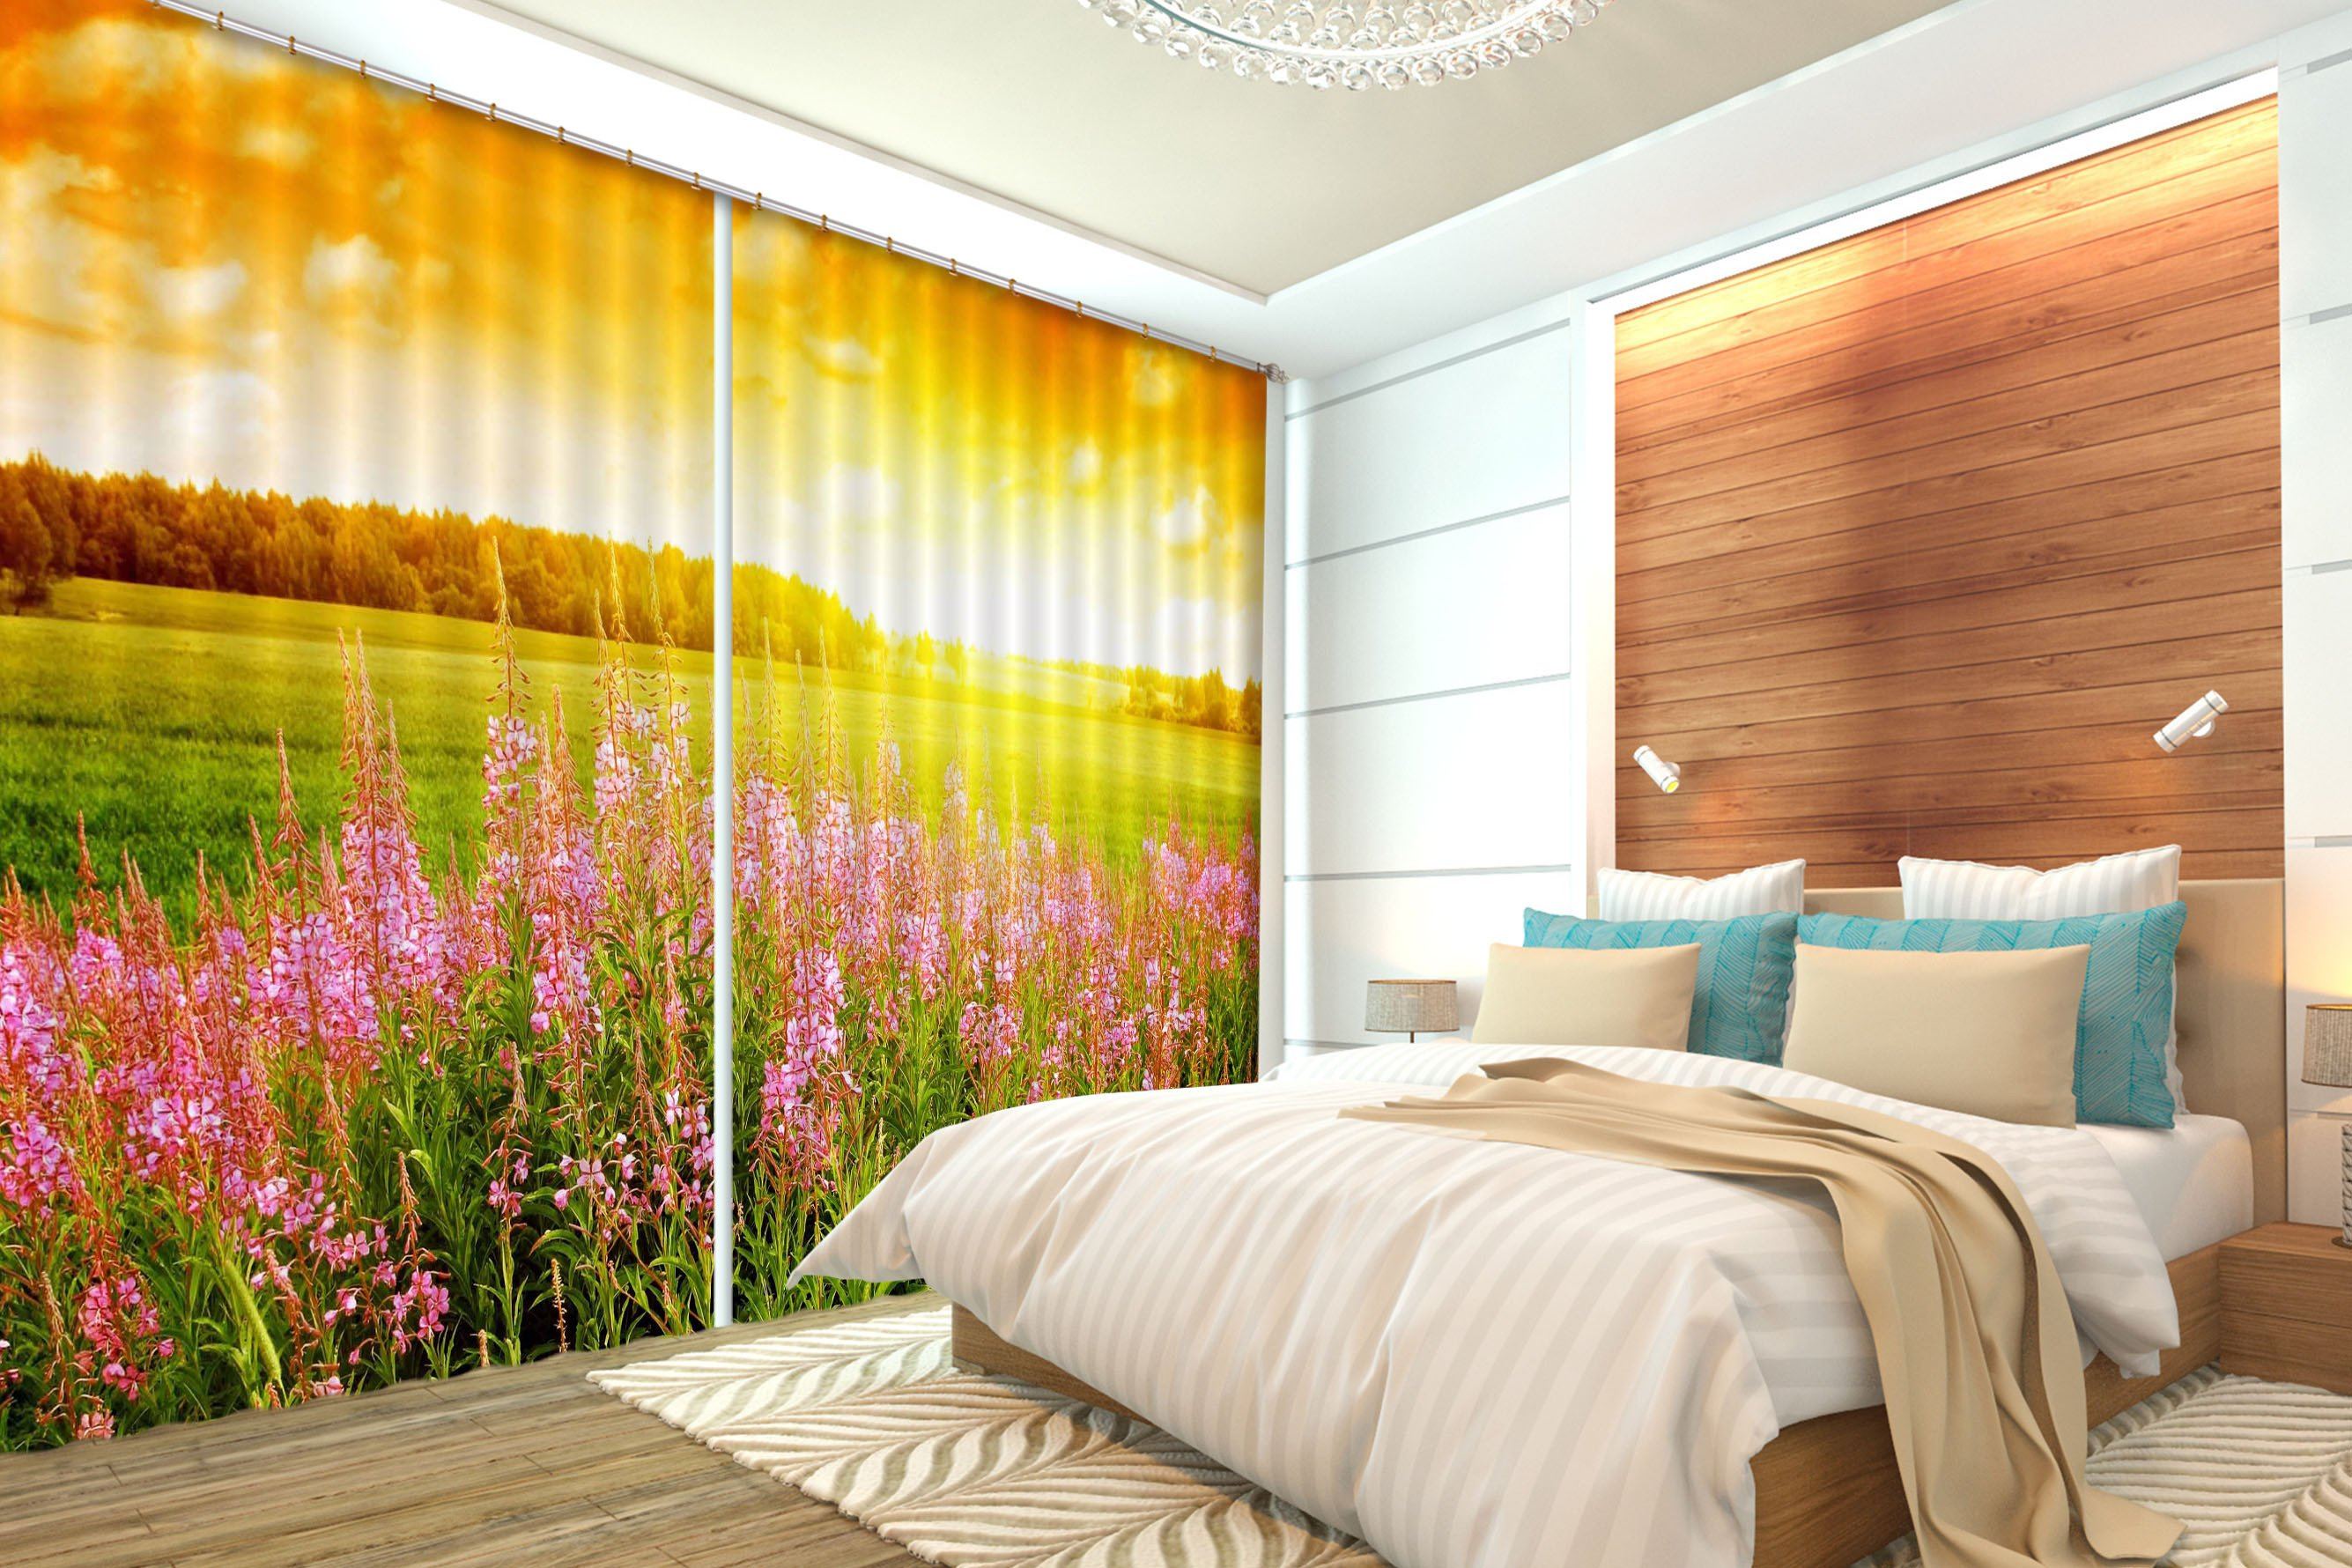 3D Lawn Flowers 440 Curtains Drapes Wallpaper AJ Wallpaper 